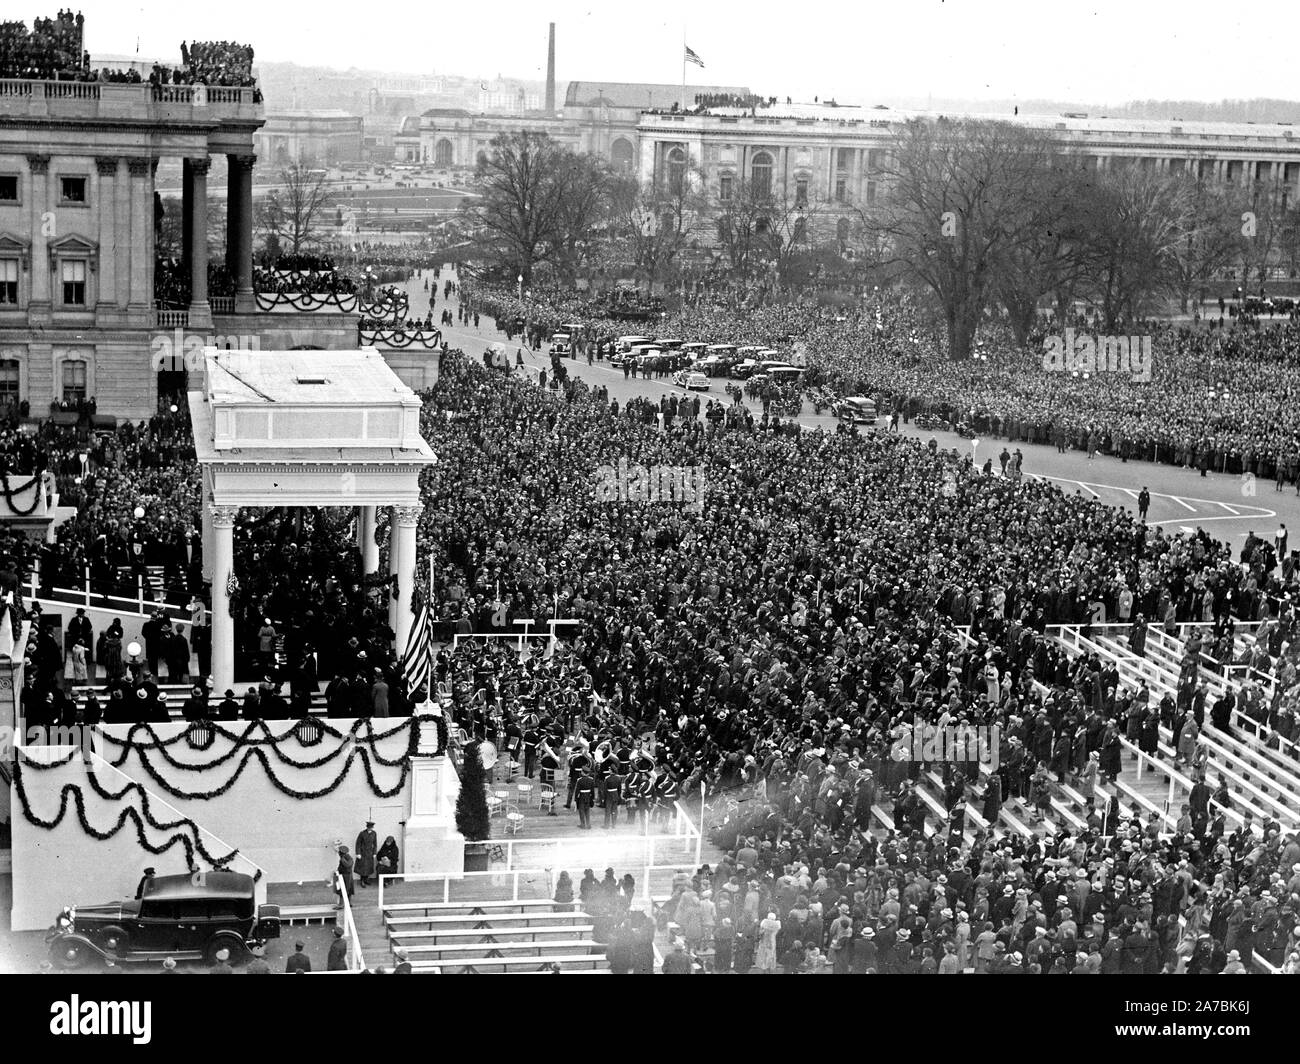 Franklin D. Roosevelt - Franklin D. Roosevelt inauguration at U.S. Capitol, Washington, D.C. - March 4, 1933 Stock Photo